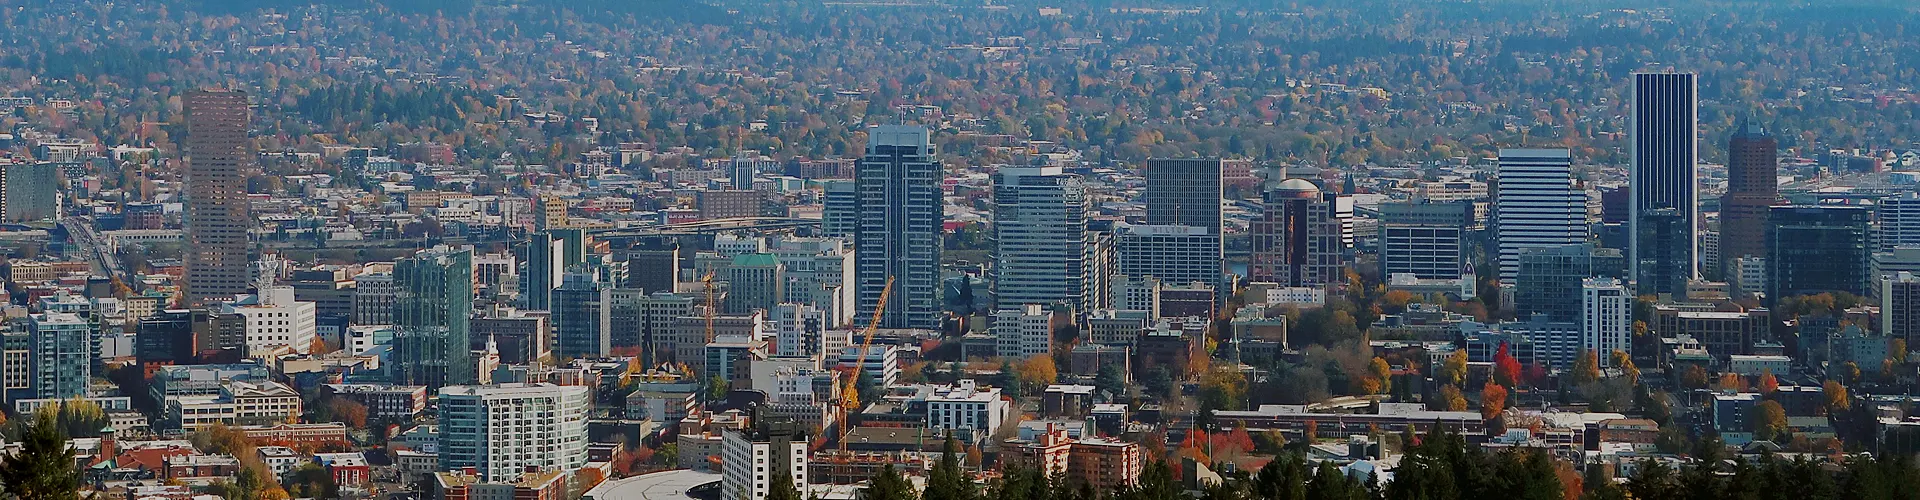 Panoramic shot of downtown Portland, Oregon